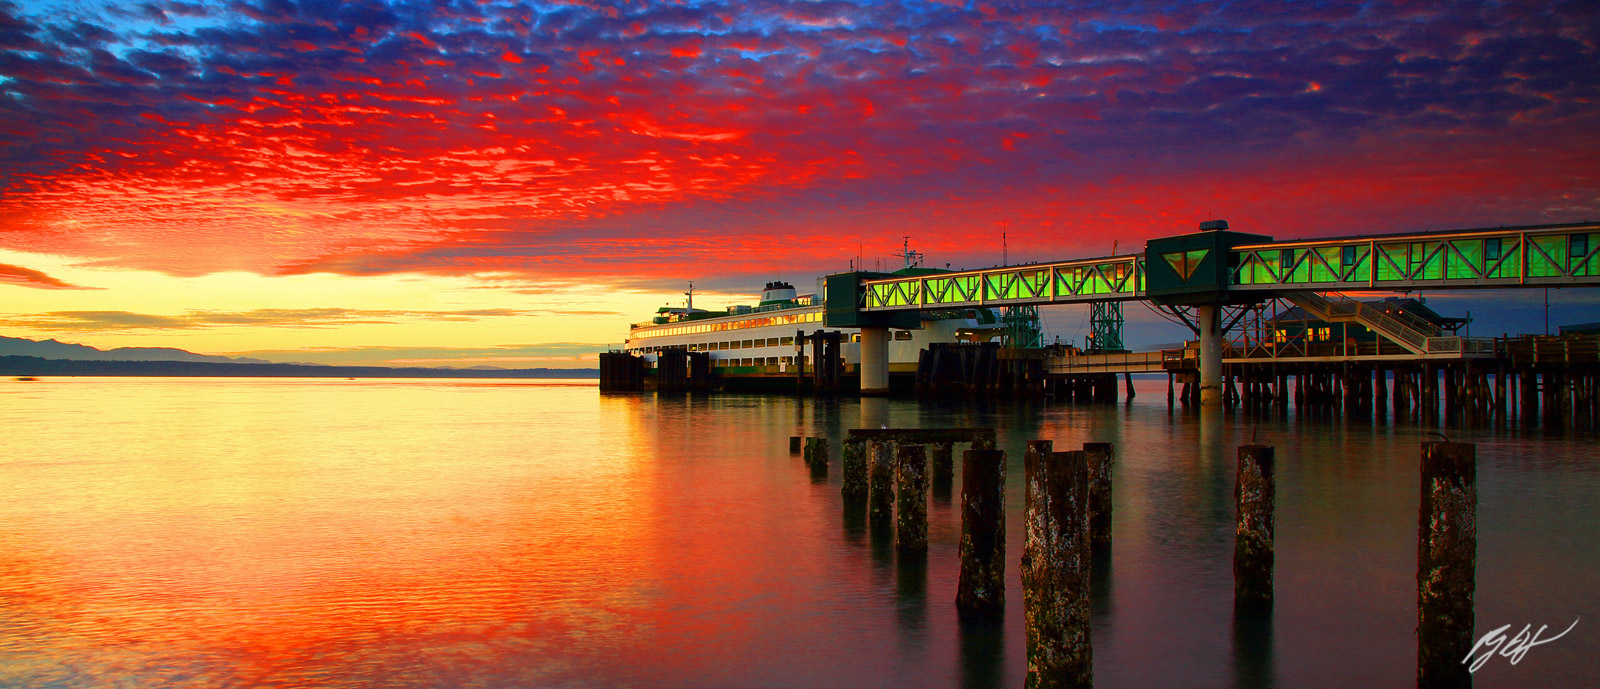 Sunset with the Edmonds Ferry at Dock, Edmonds Beach, Washington